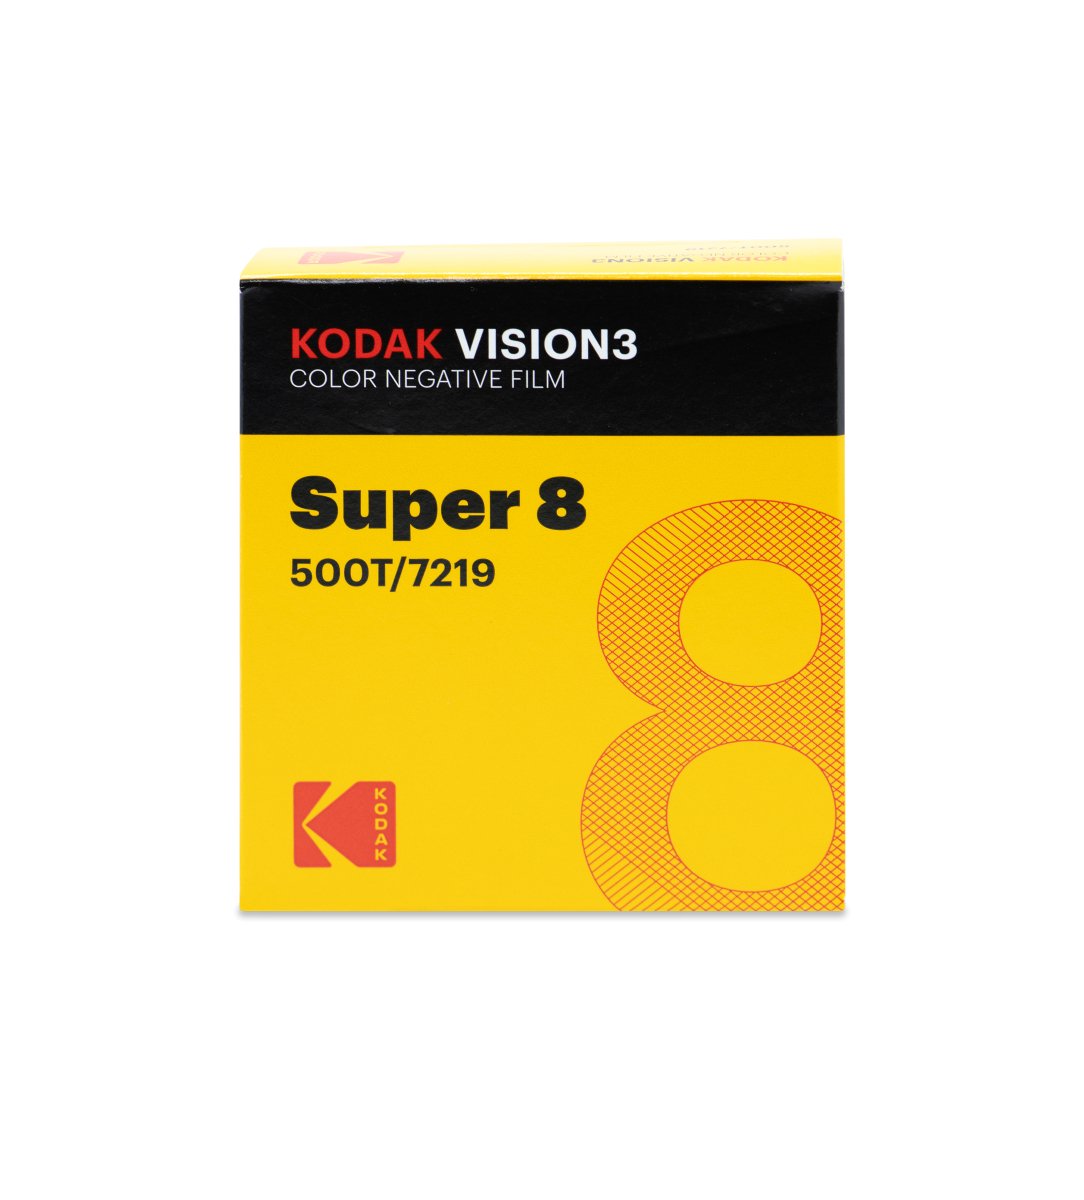 Kodak Film VISION3 500T Color Negative Film - Super 8 - 50' Roll - Rewind Photo Lab - Kodak